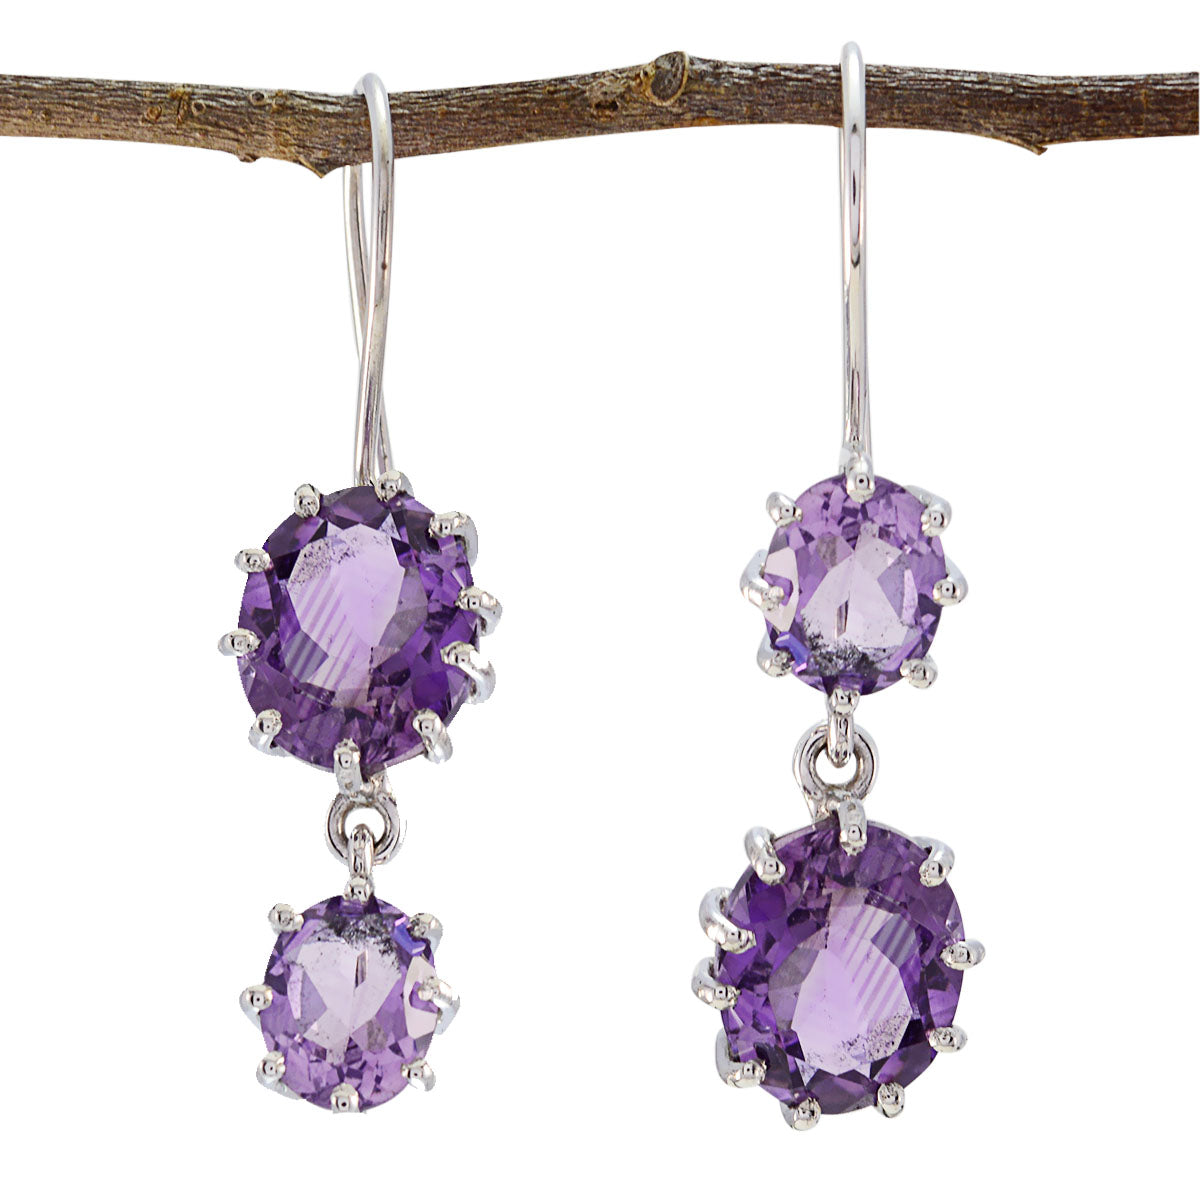 Riyo Real Gemstones round Faceted Purple Amethyst Silver Earrings gift for friend